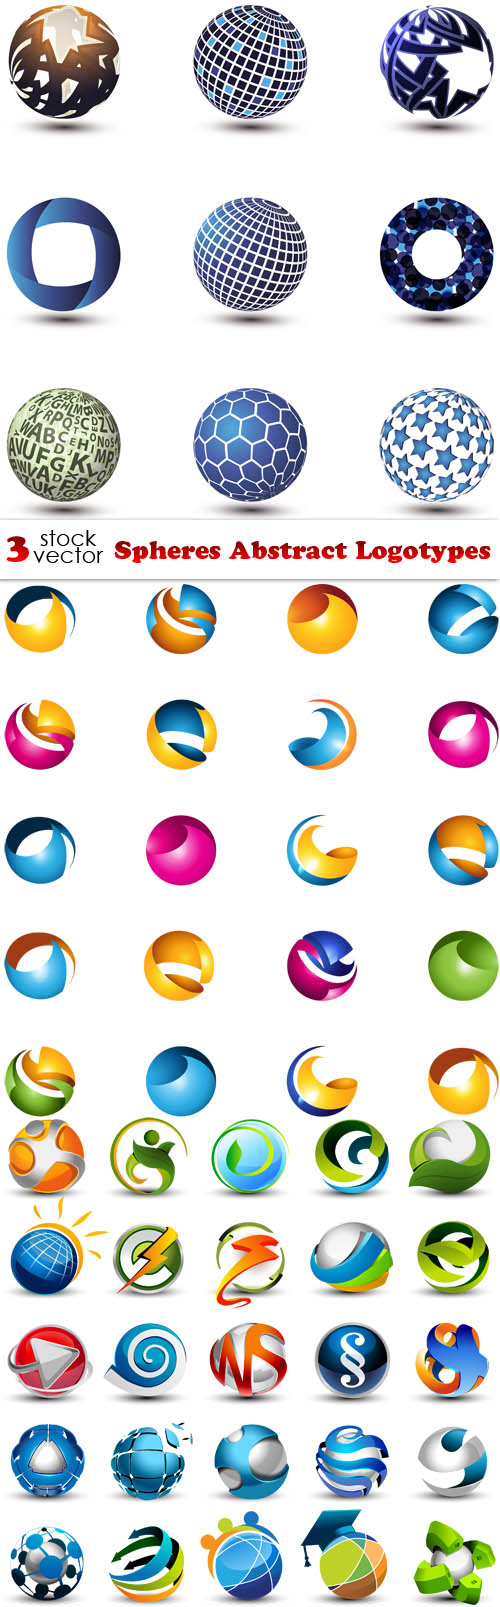 Vectors - Spheres Abstract Logotypes 3